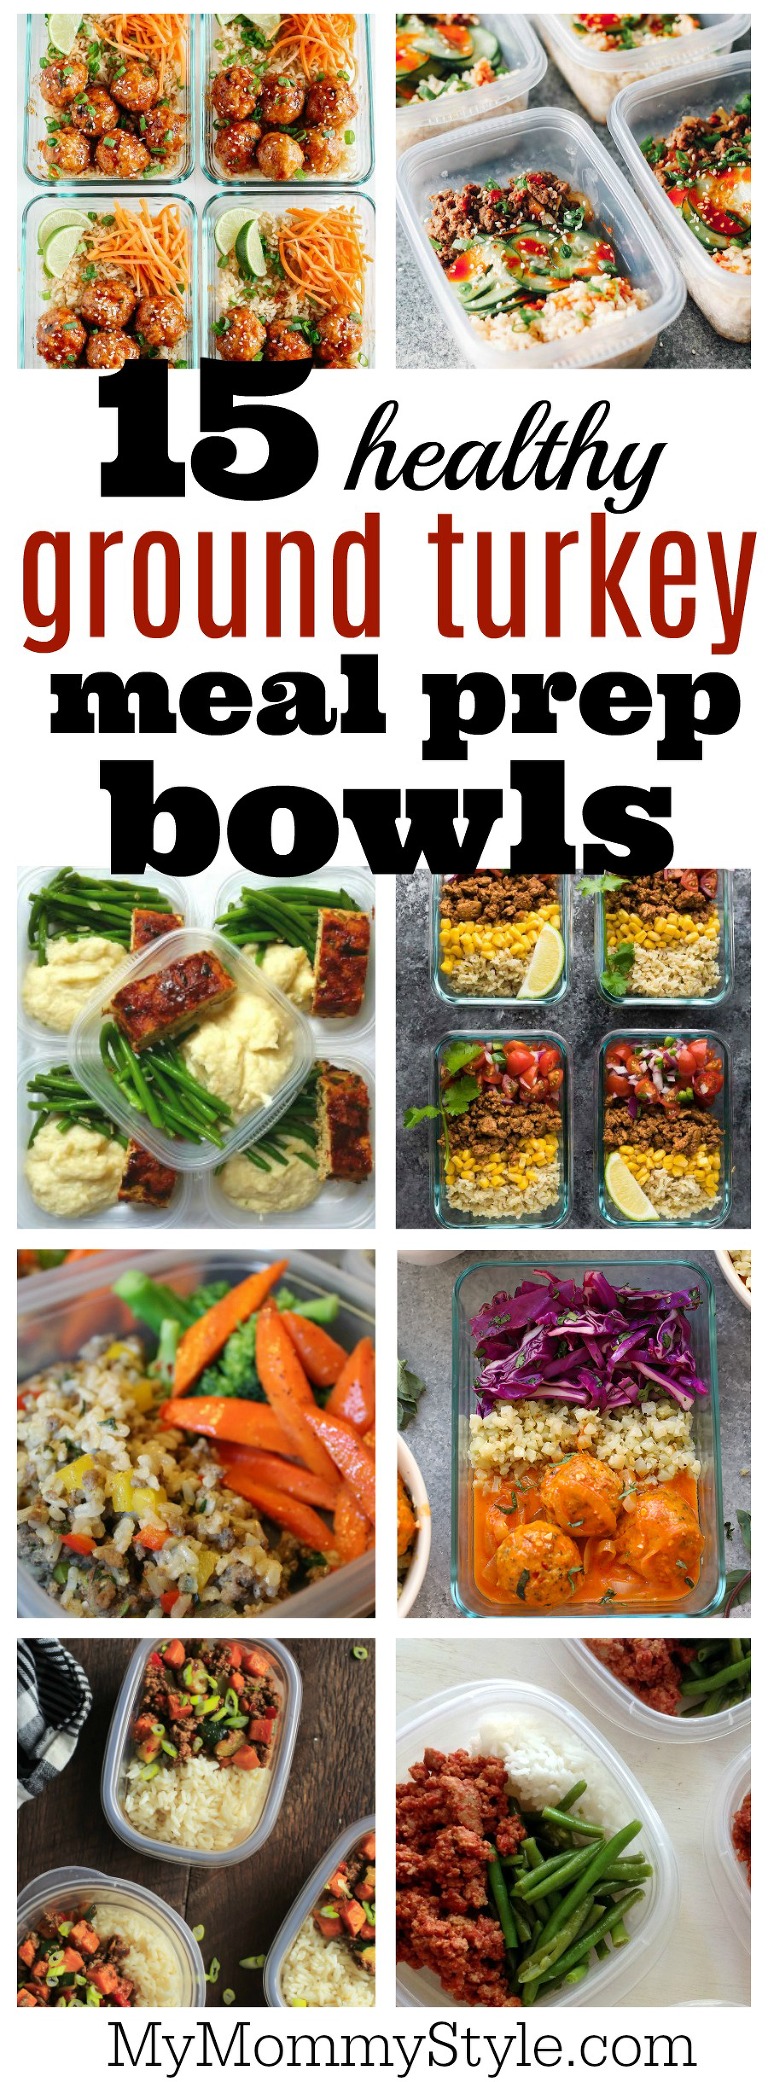 15 healthy ground turkey meal prep bowls